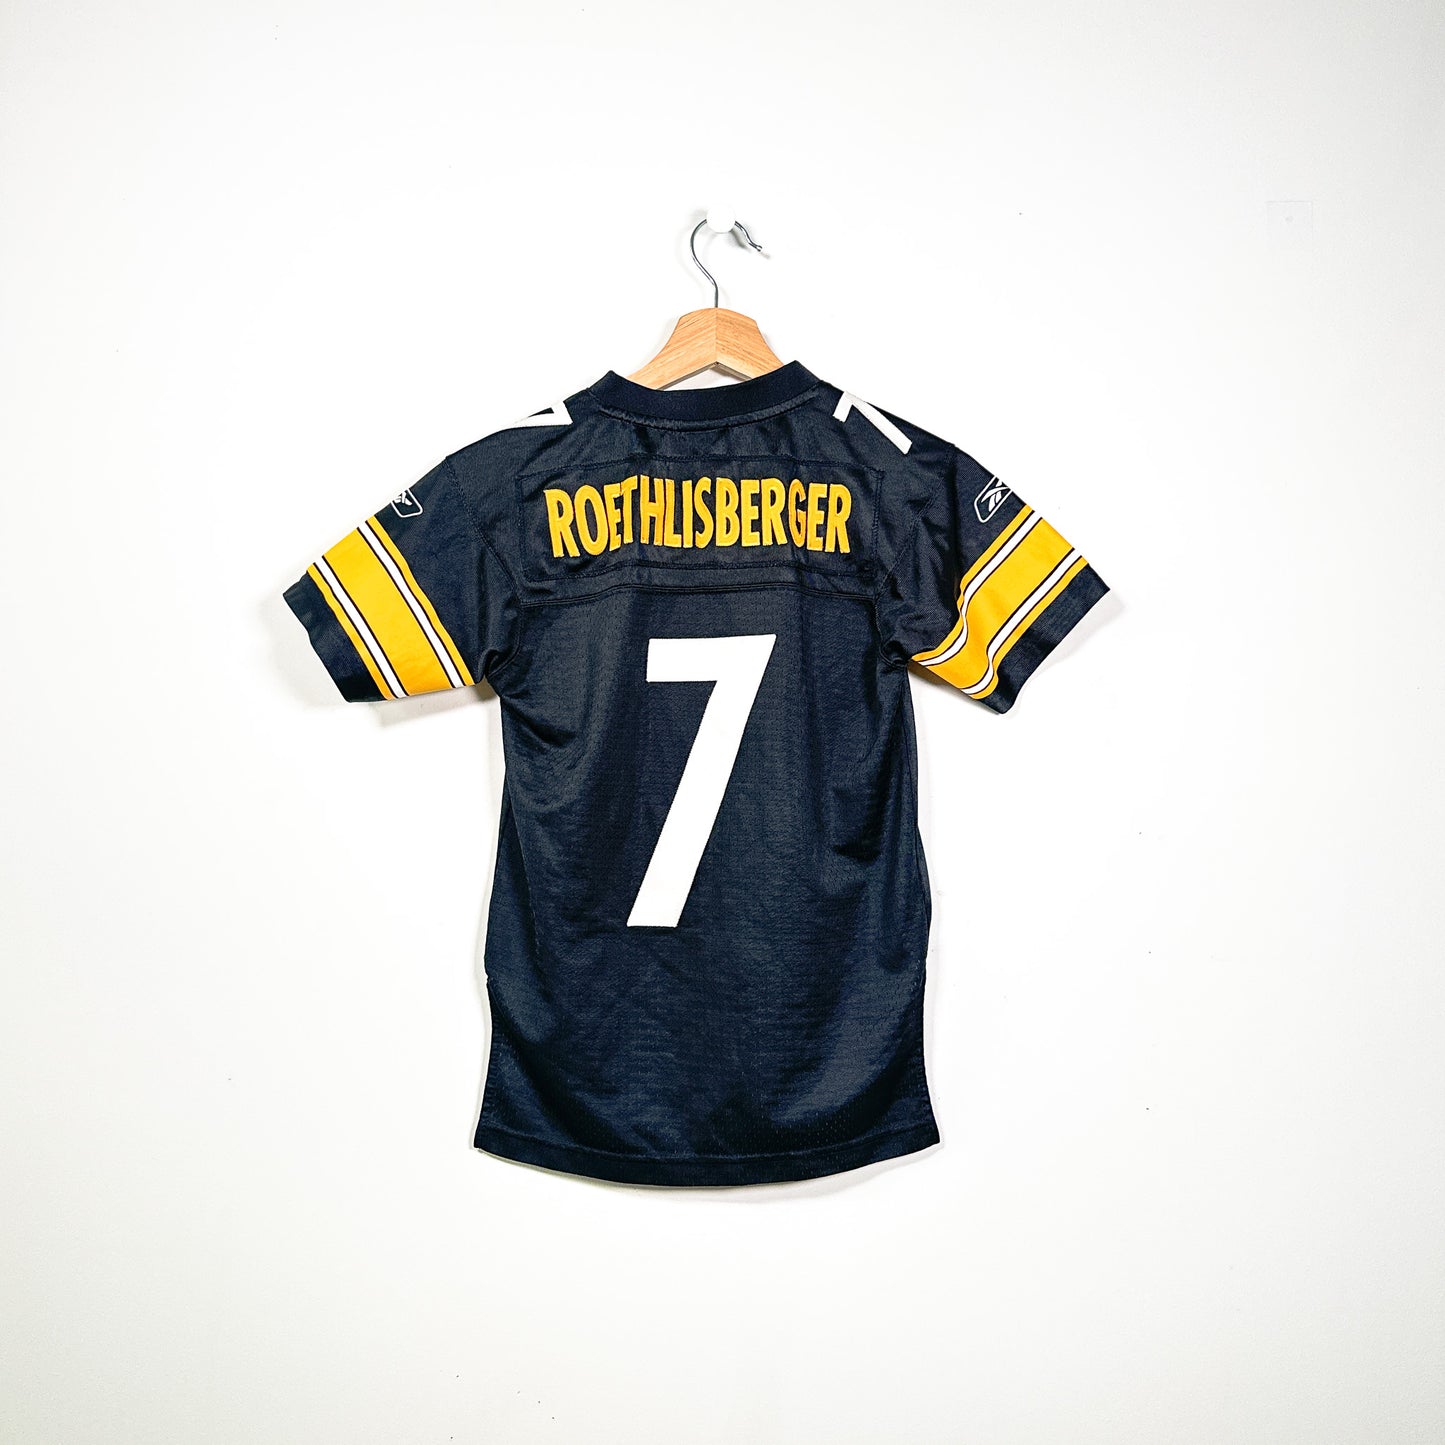 Kids Roethlisberger Pittsburgh Steelers Steelers Sewn Jersey - Size 8yr